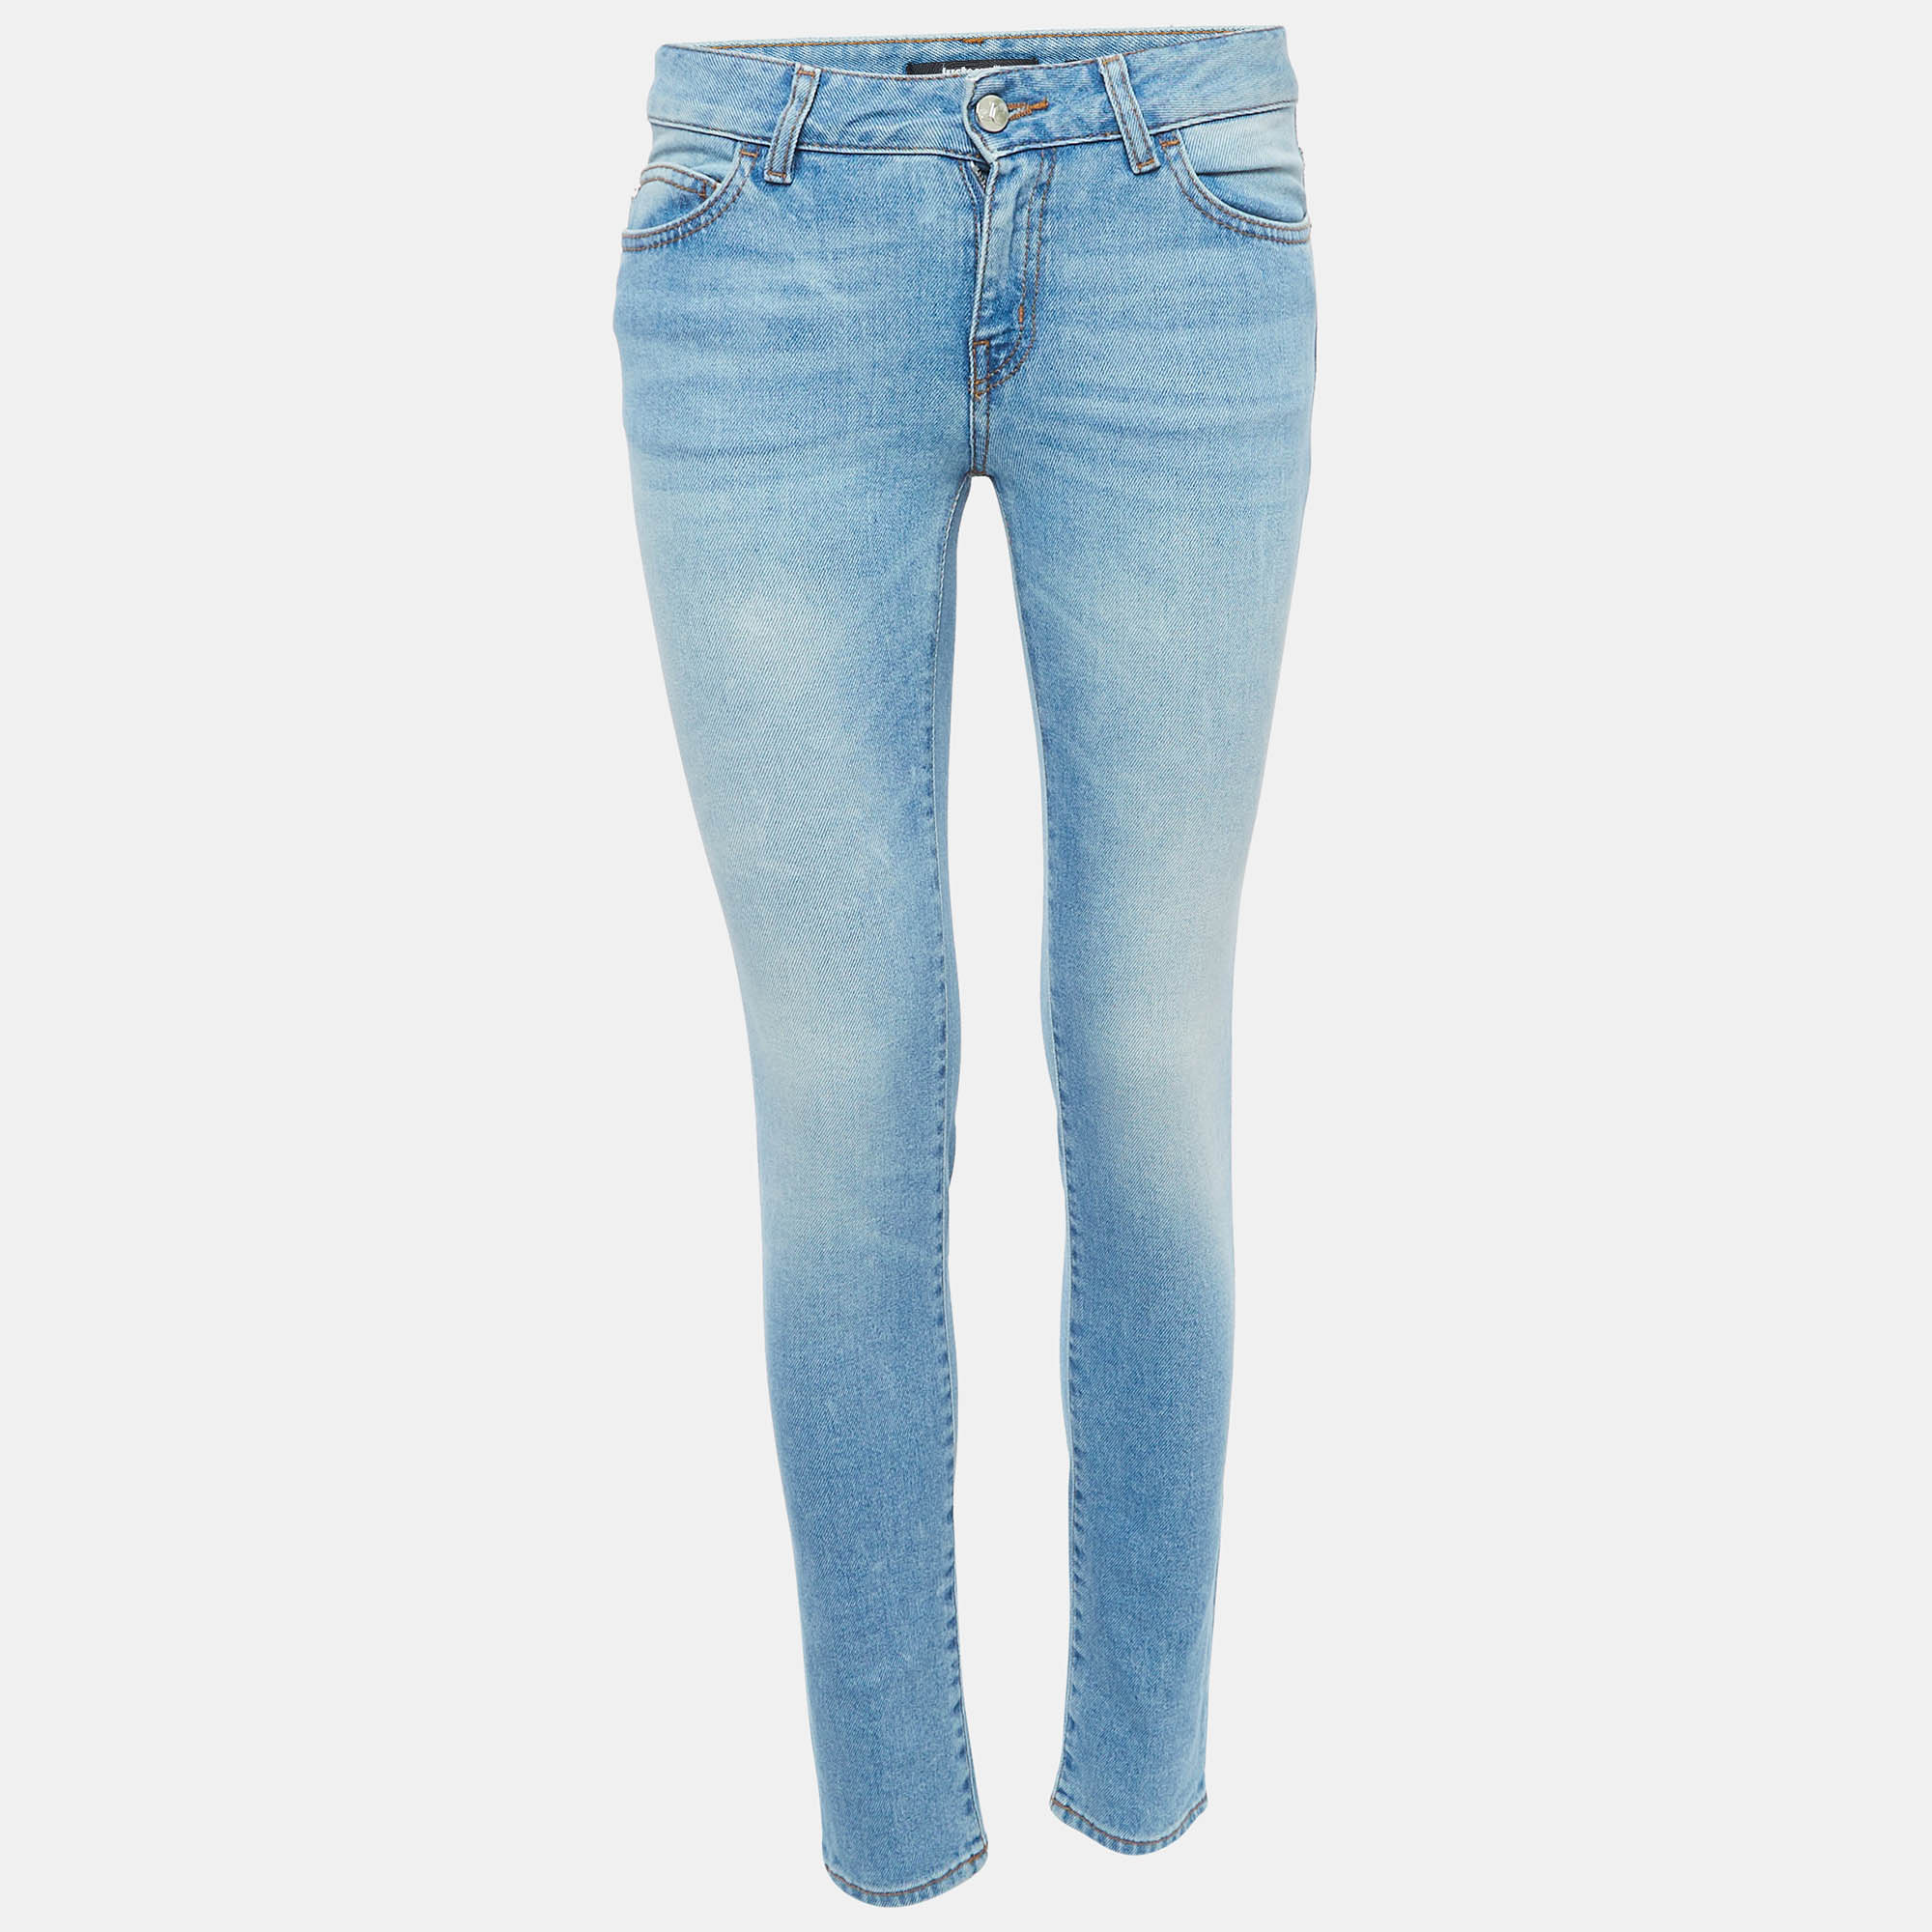 Just Cavalli Blue Denim Embroidered Pocket Slim Fit Jeans S Waist 26